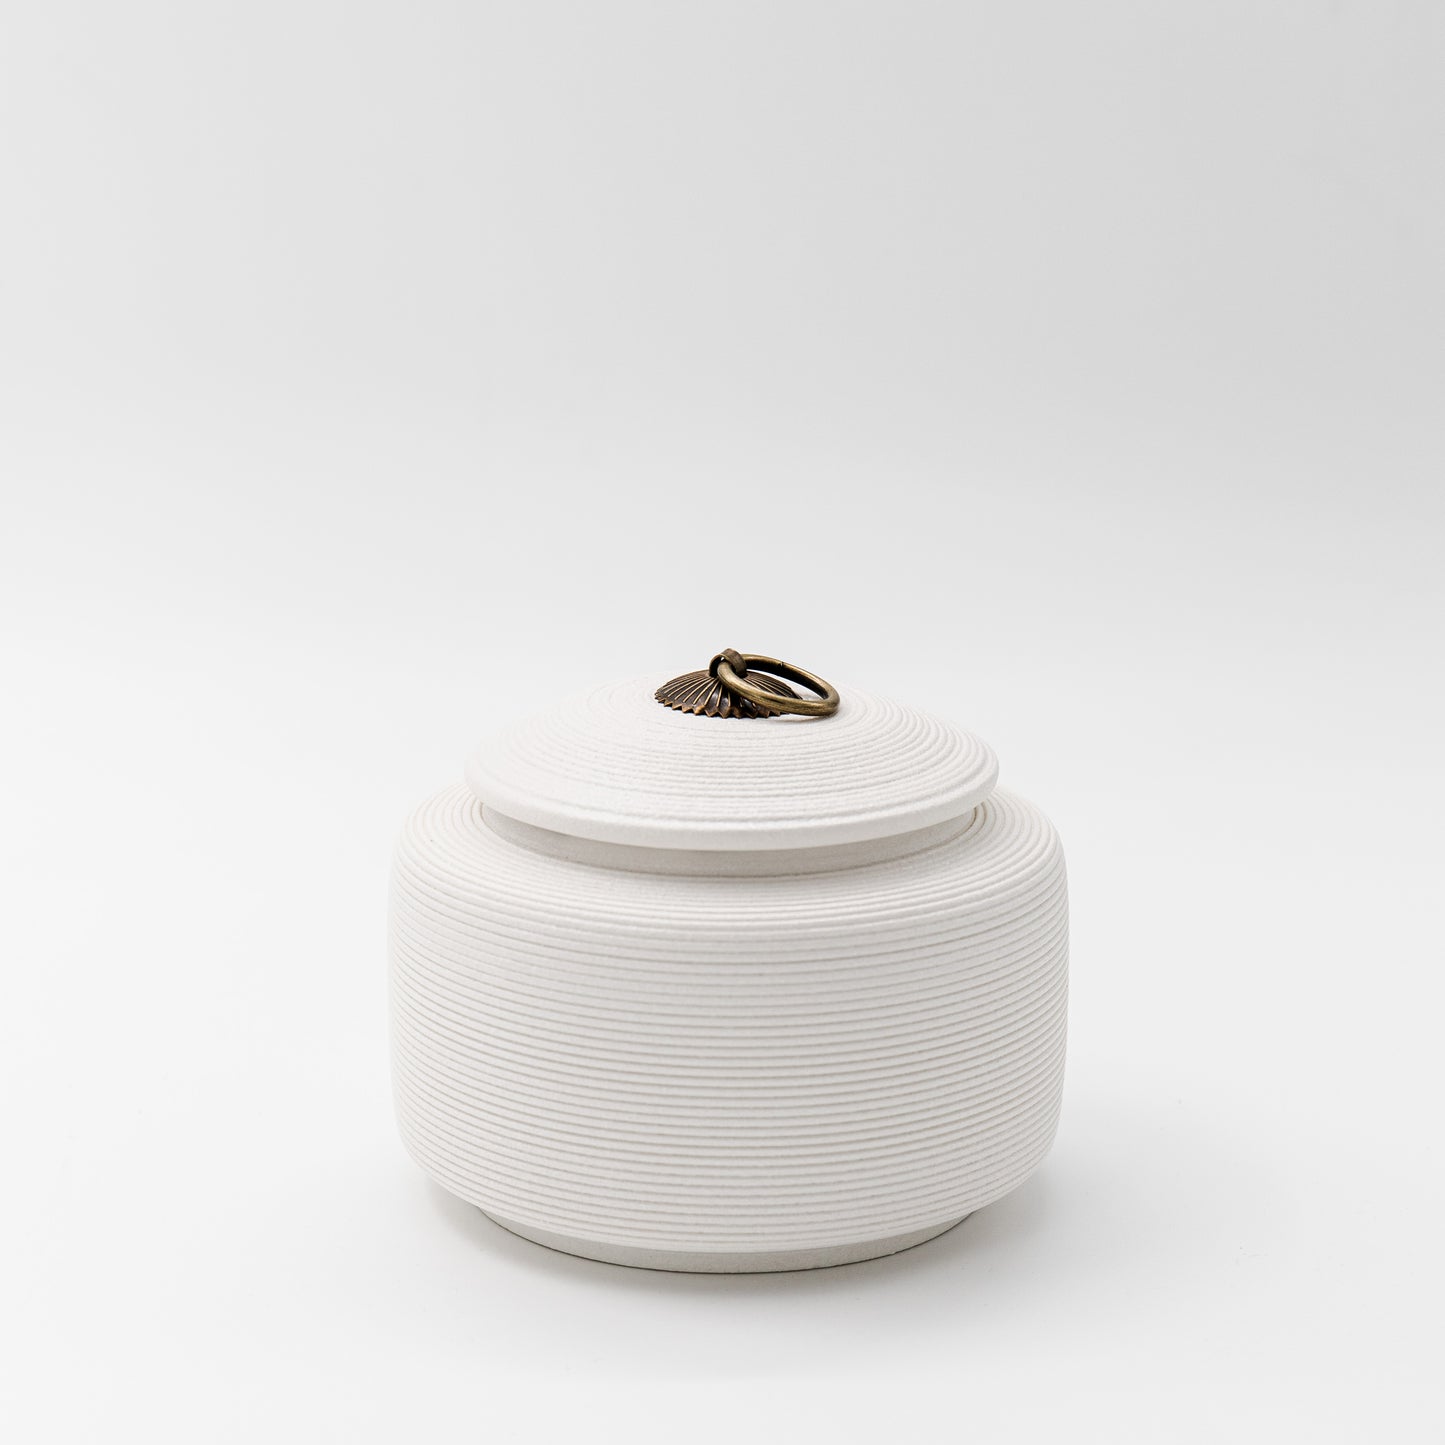  kleine witte oosterse keramische urn voor mens en dier hond kat